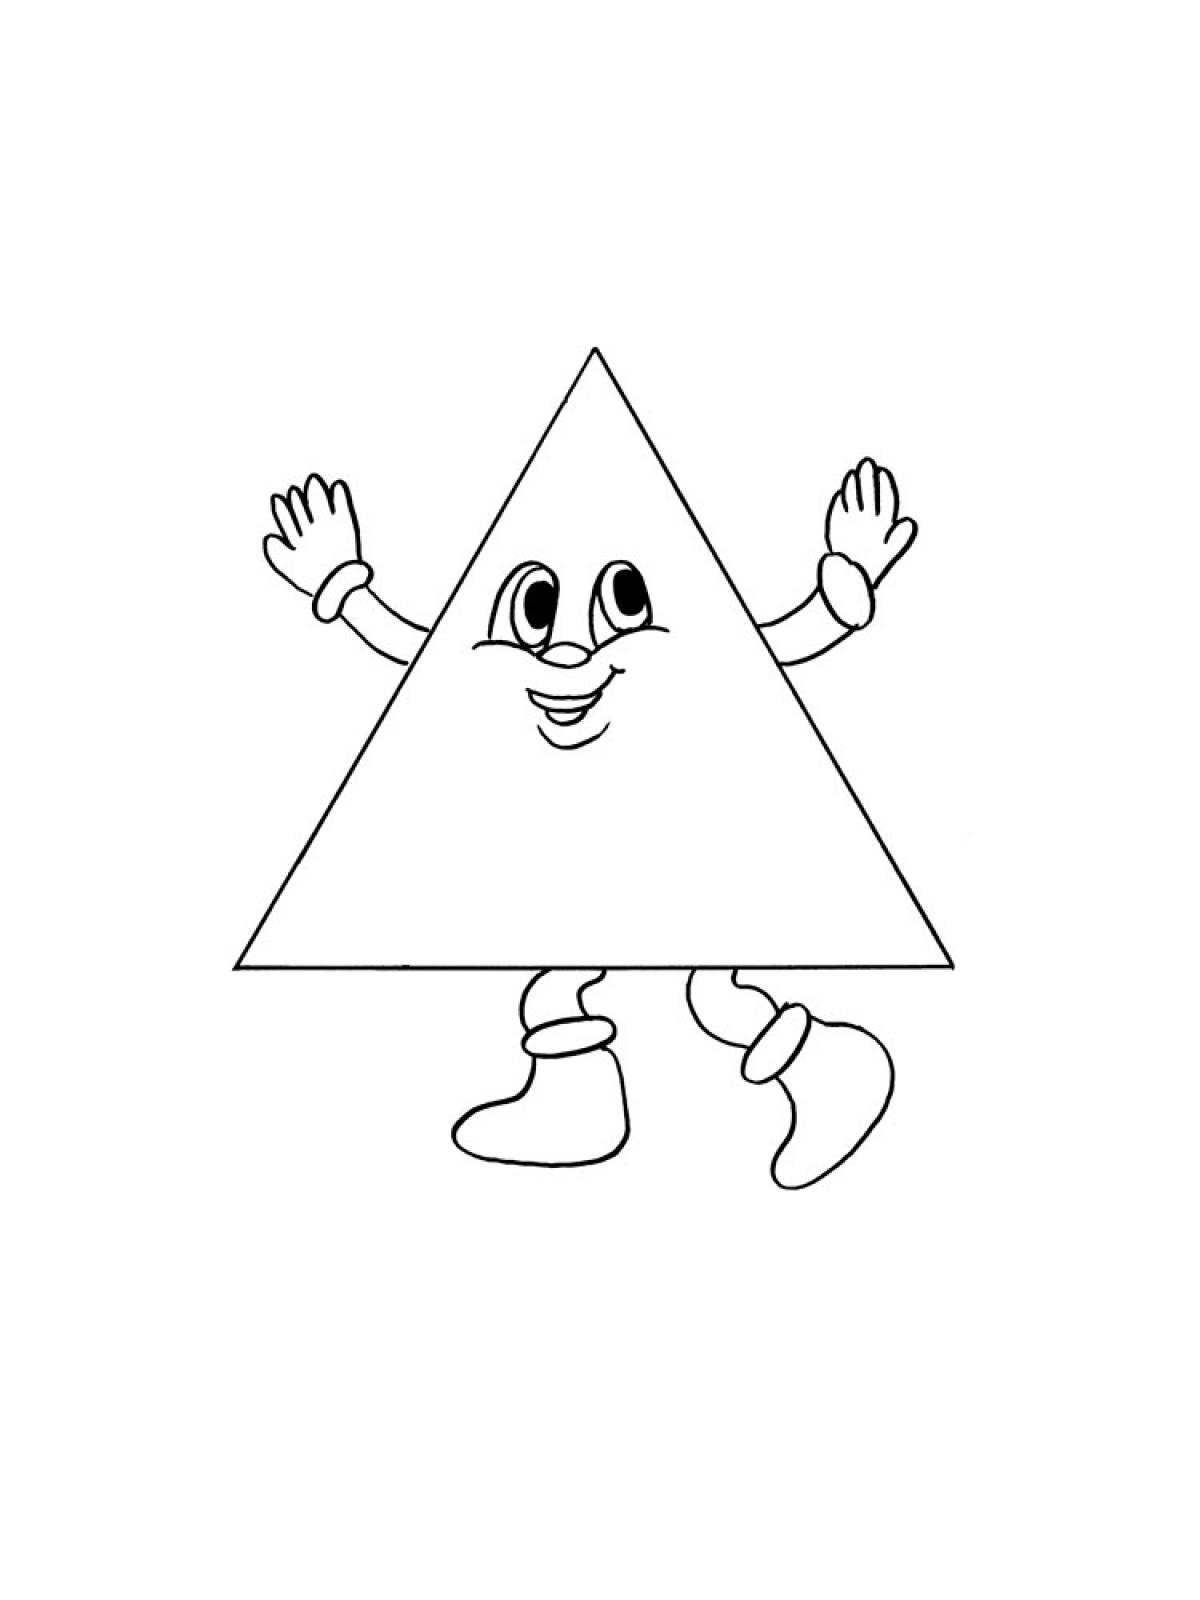 Triangle 18